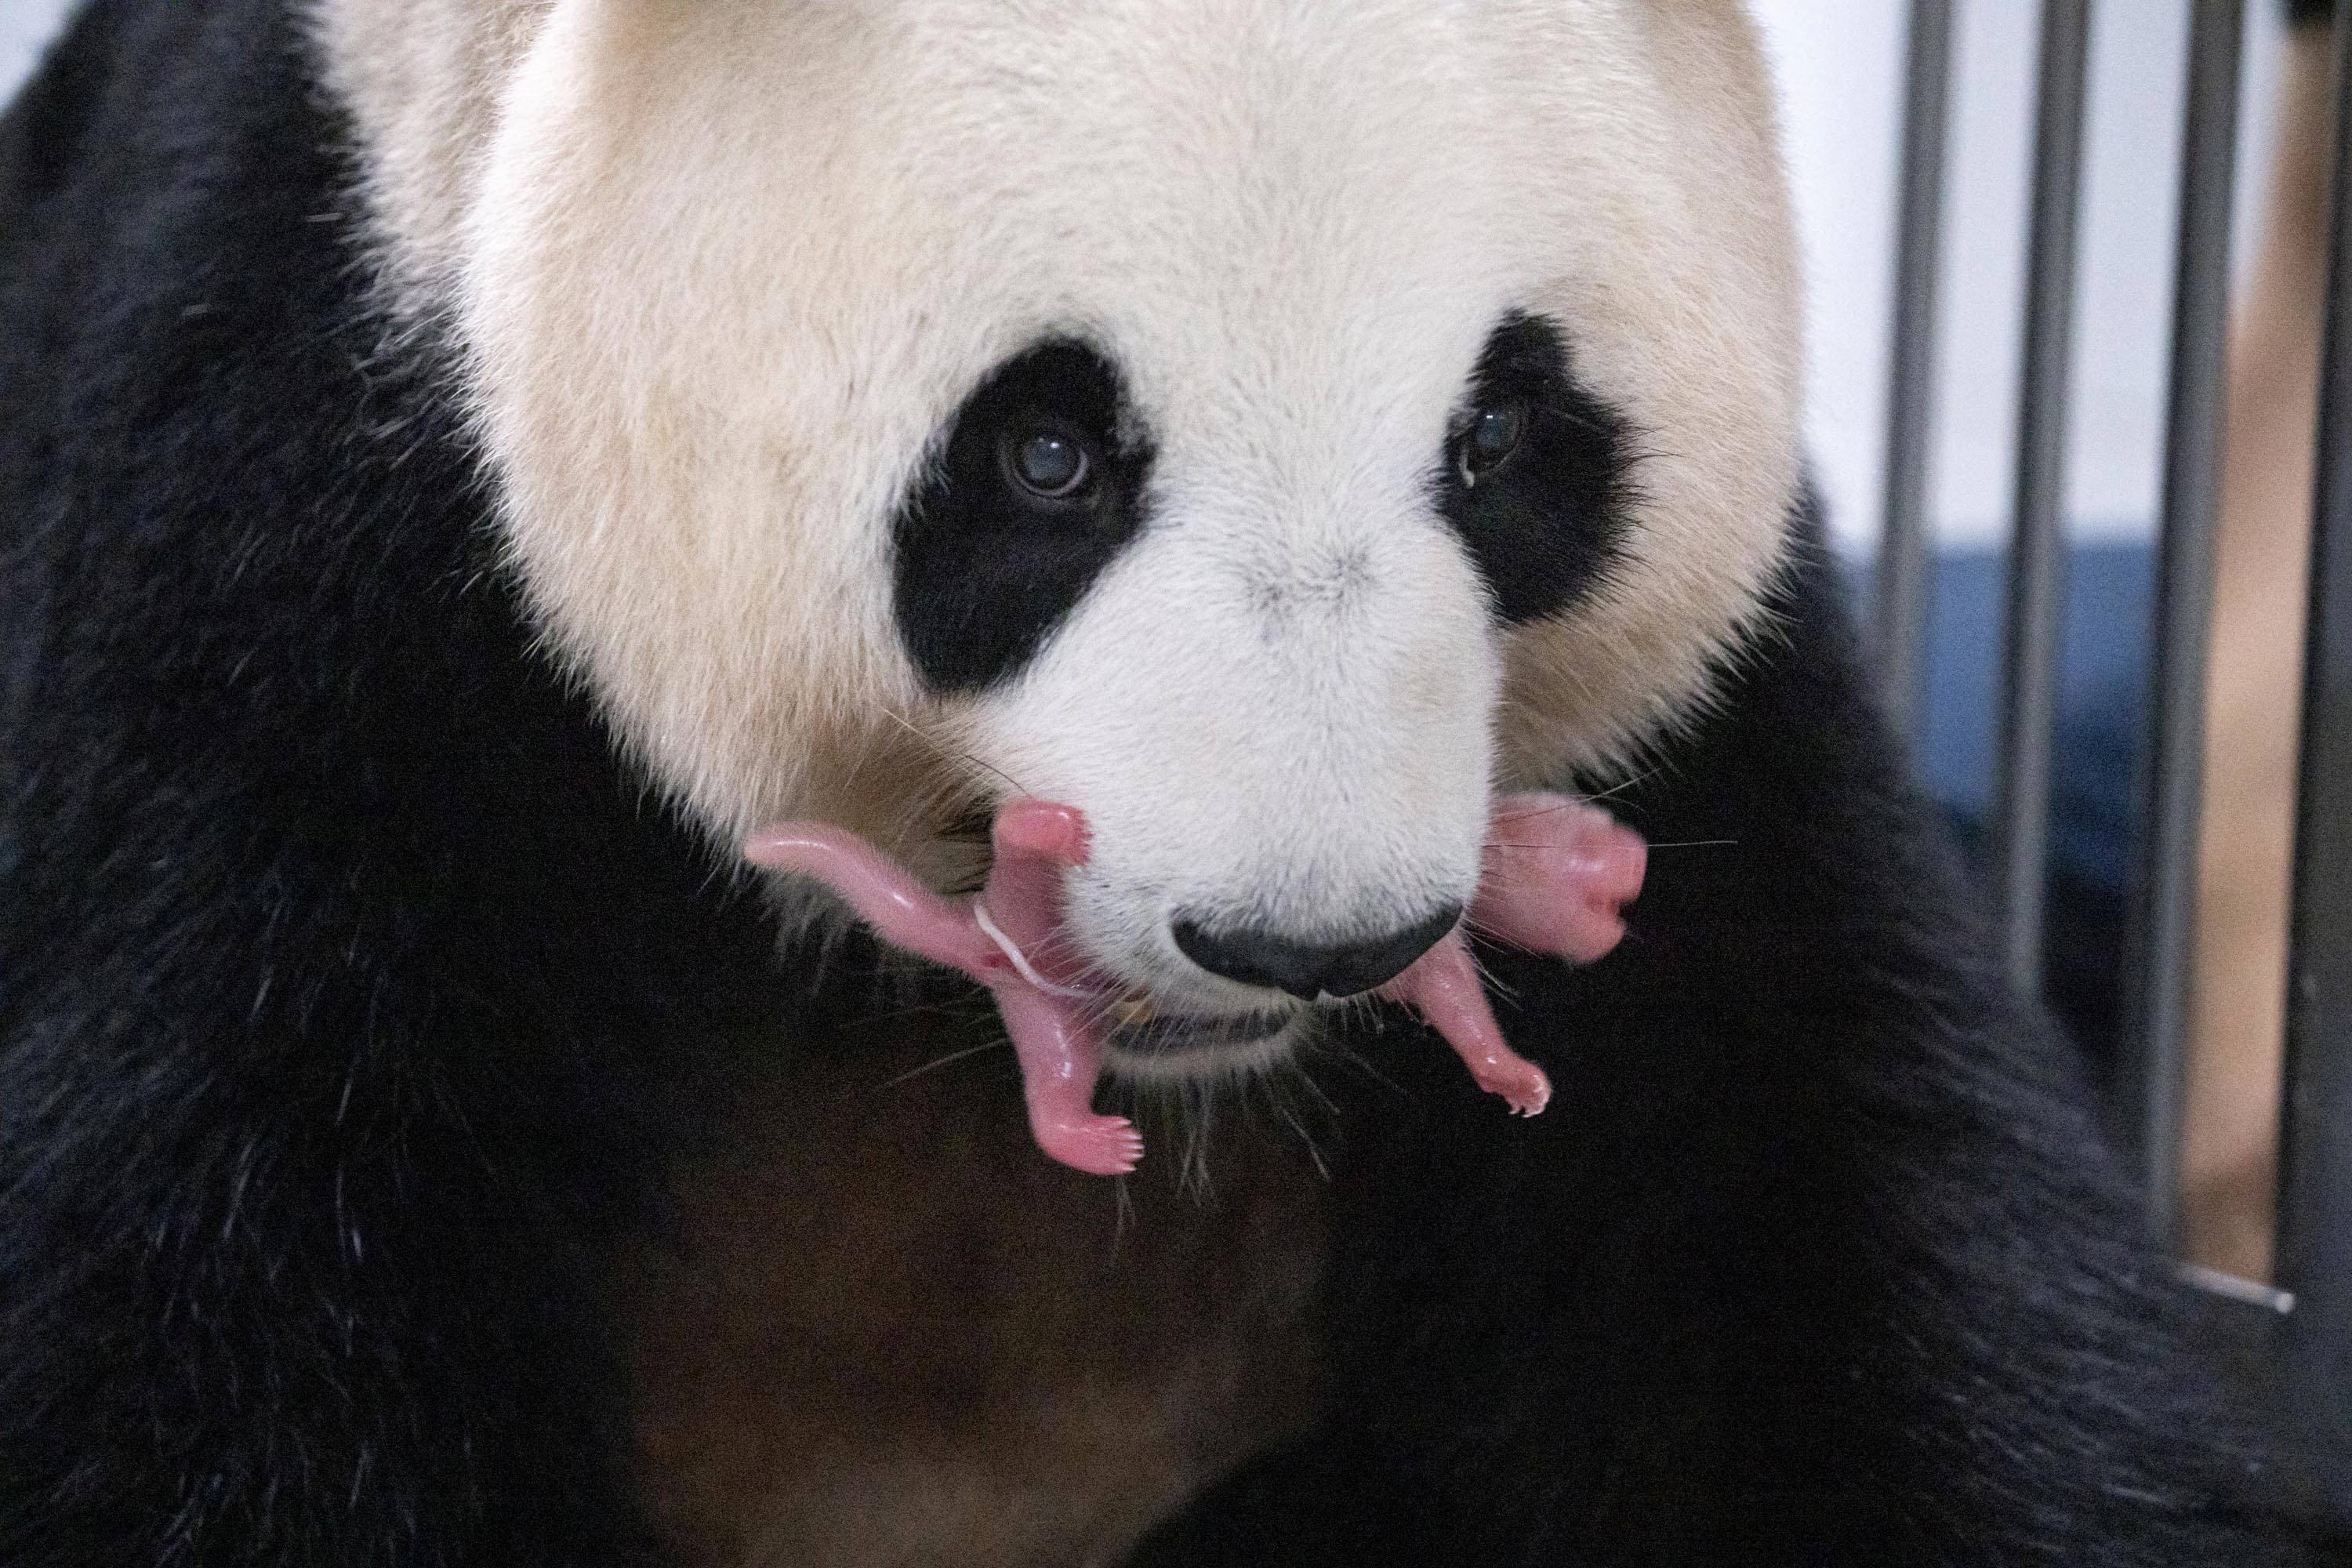 pandas giving birth